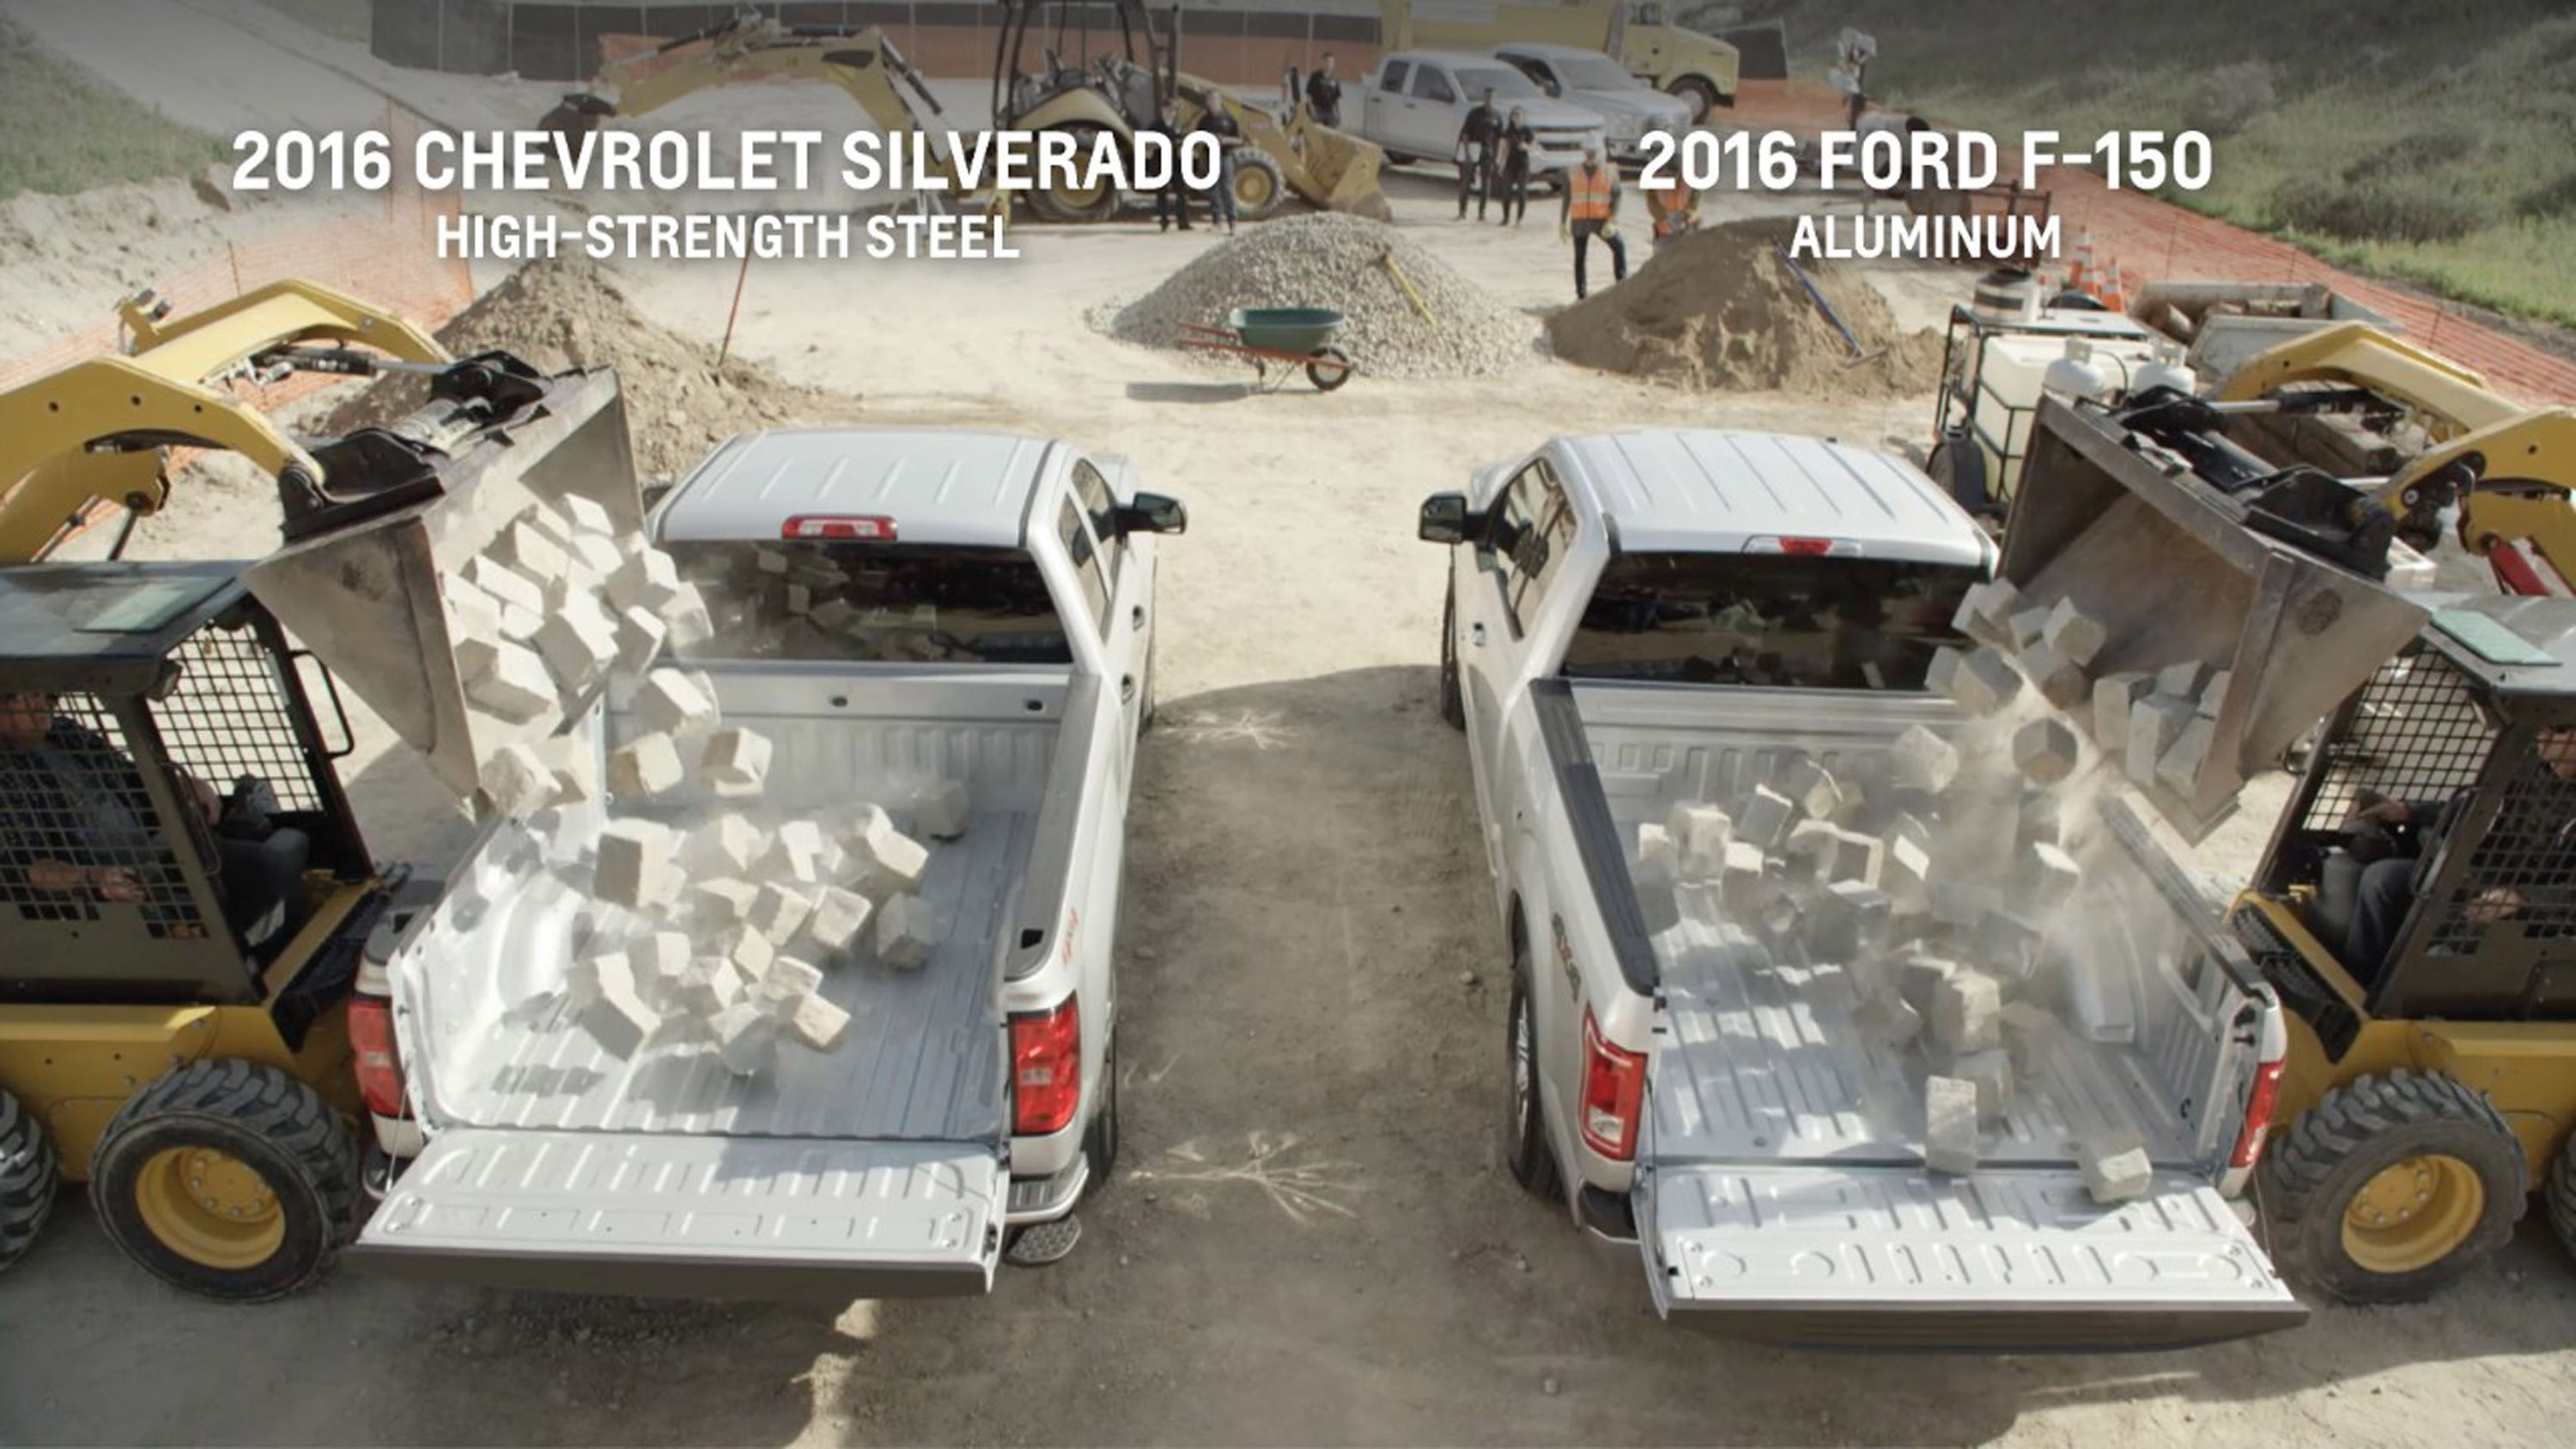 Chevrolet Silverado strenght tests